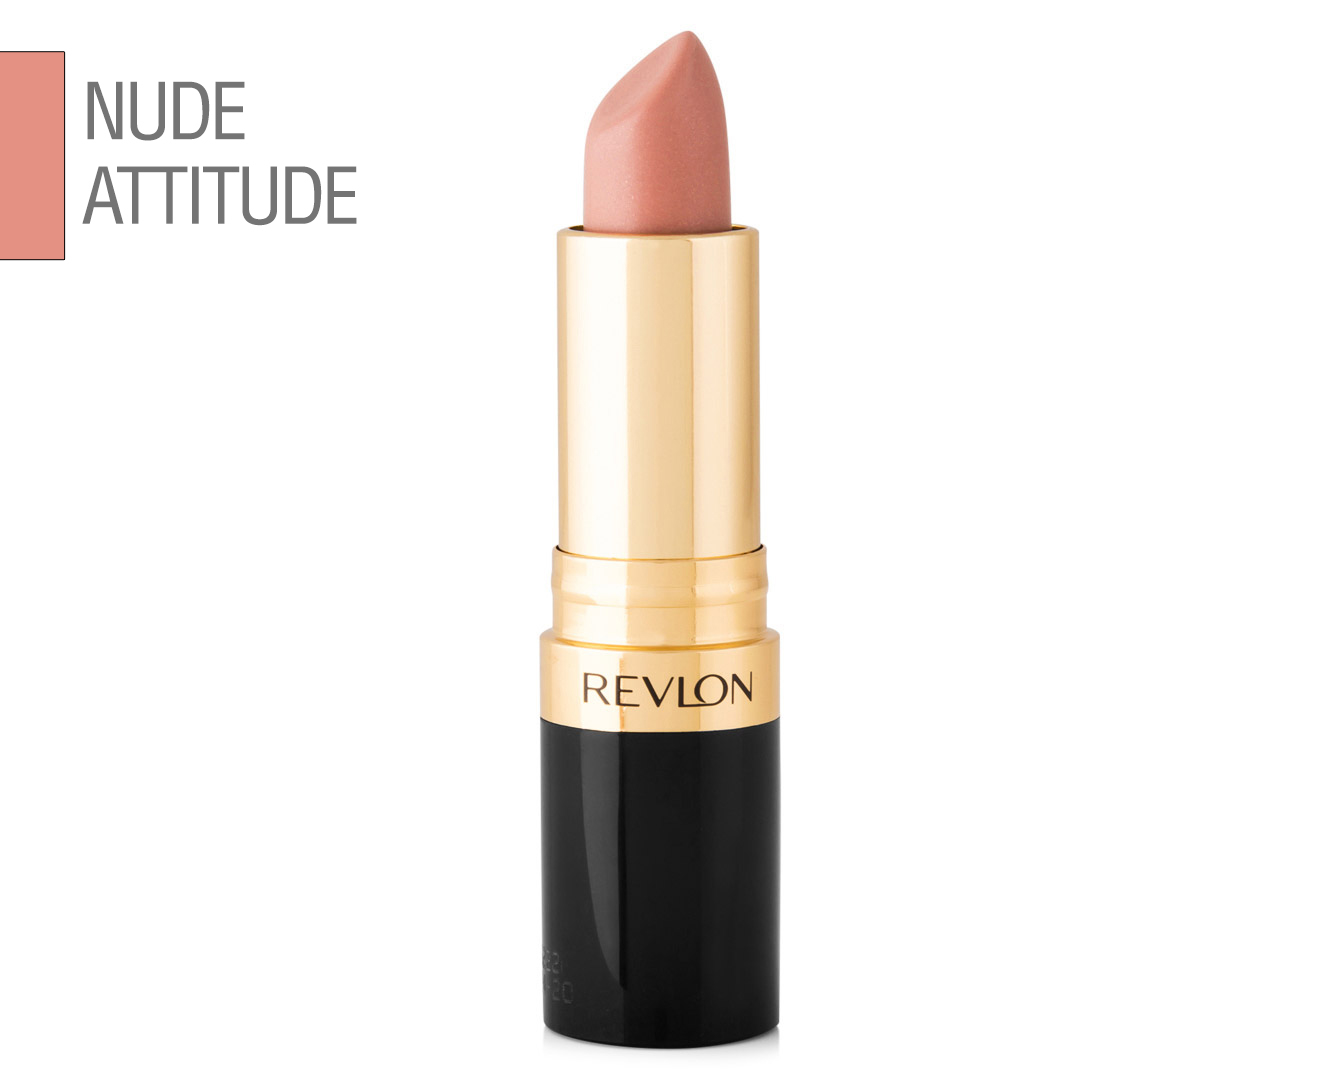 Revlon Nude Attitude Review 48